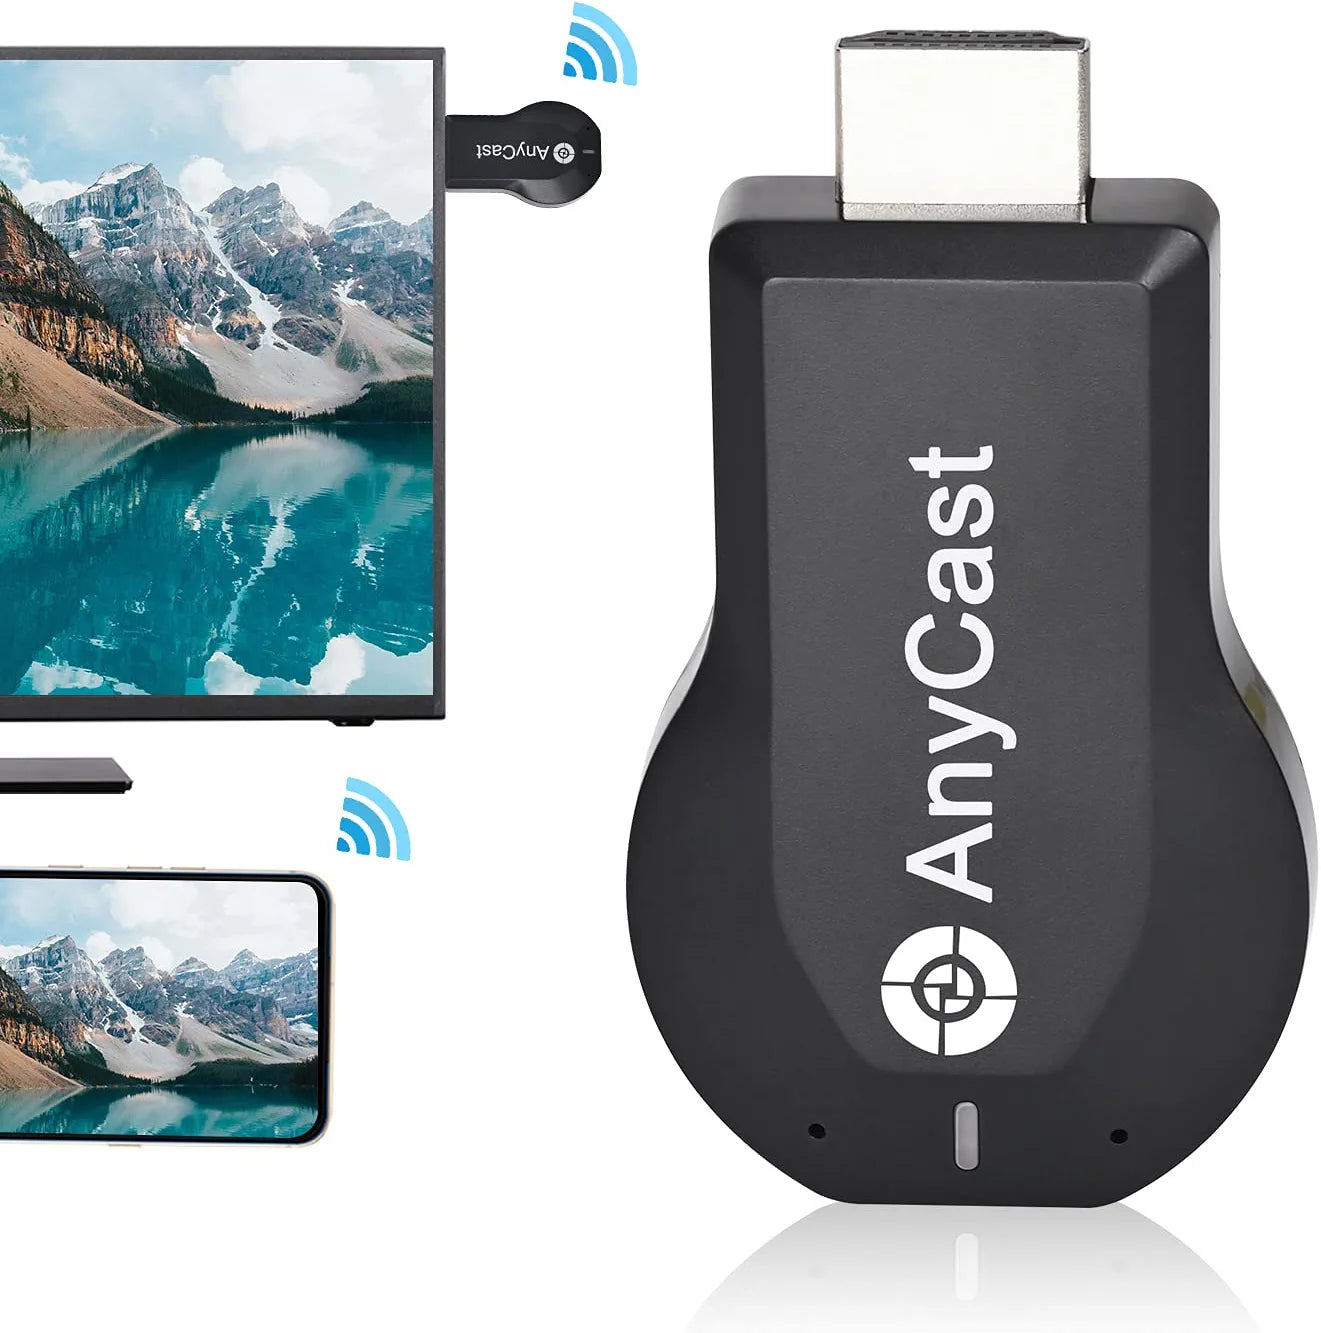 Anycast Wireless Wifi 1080p HDMI Dongle